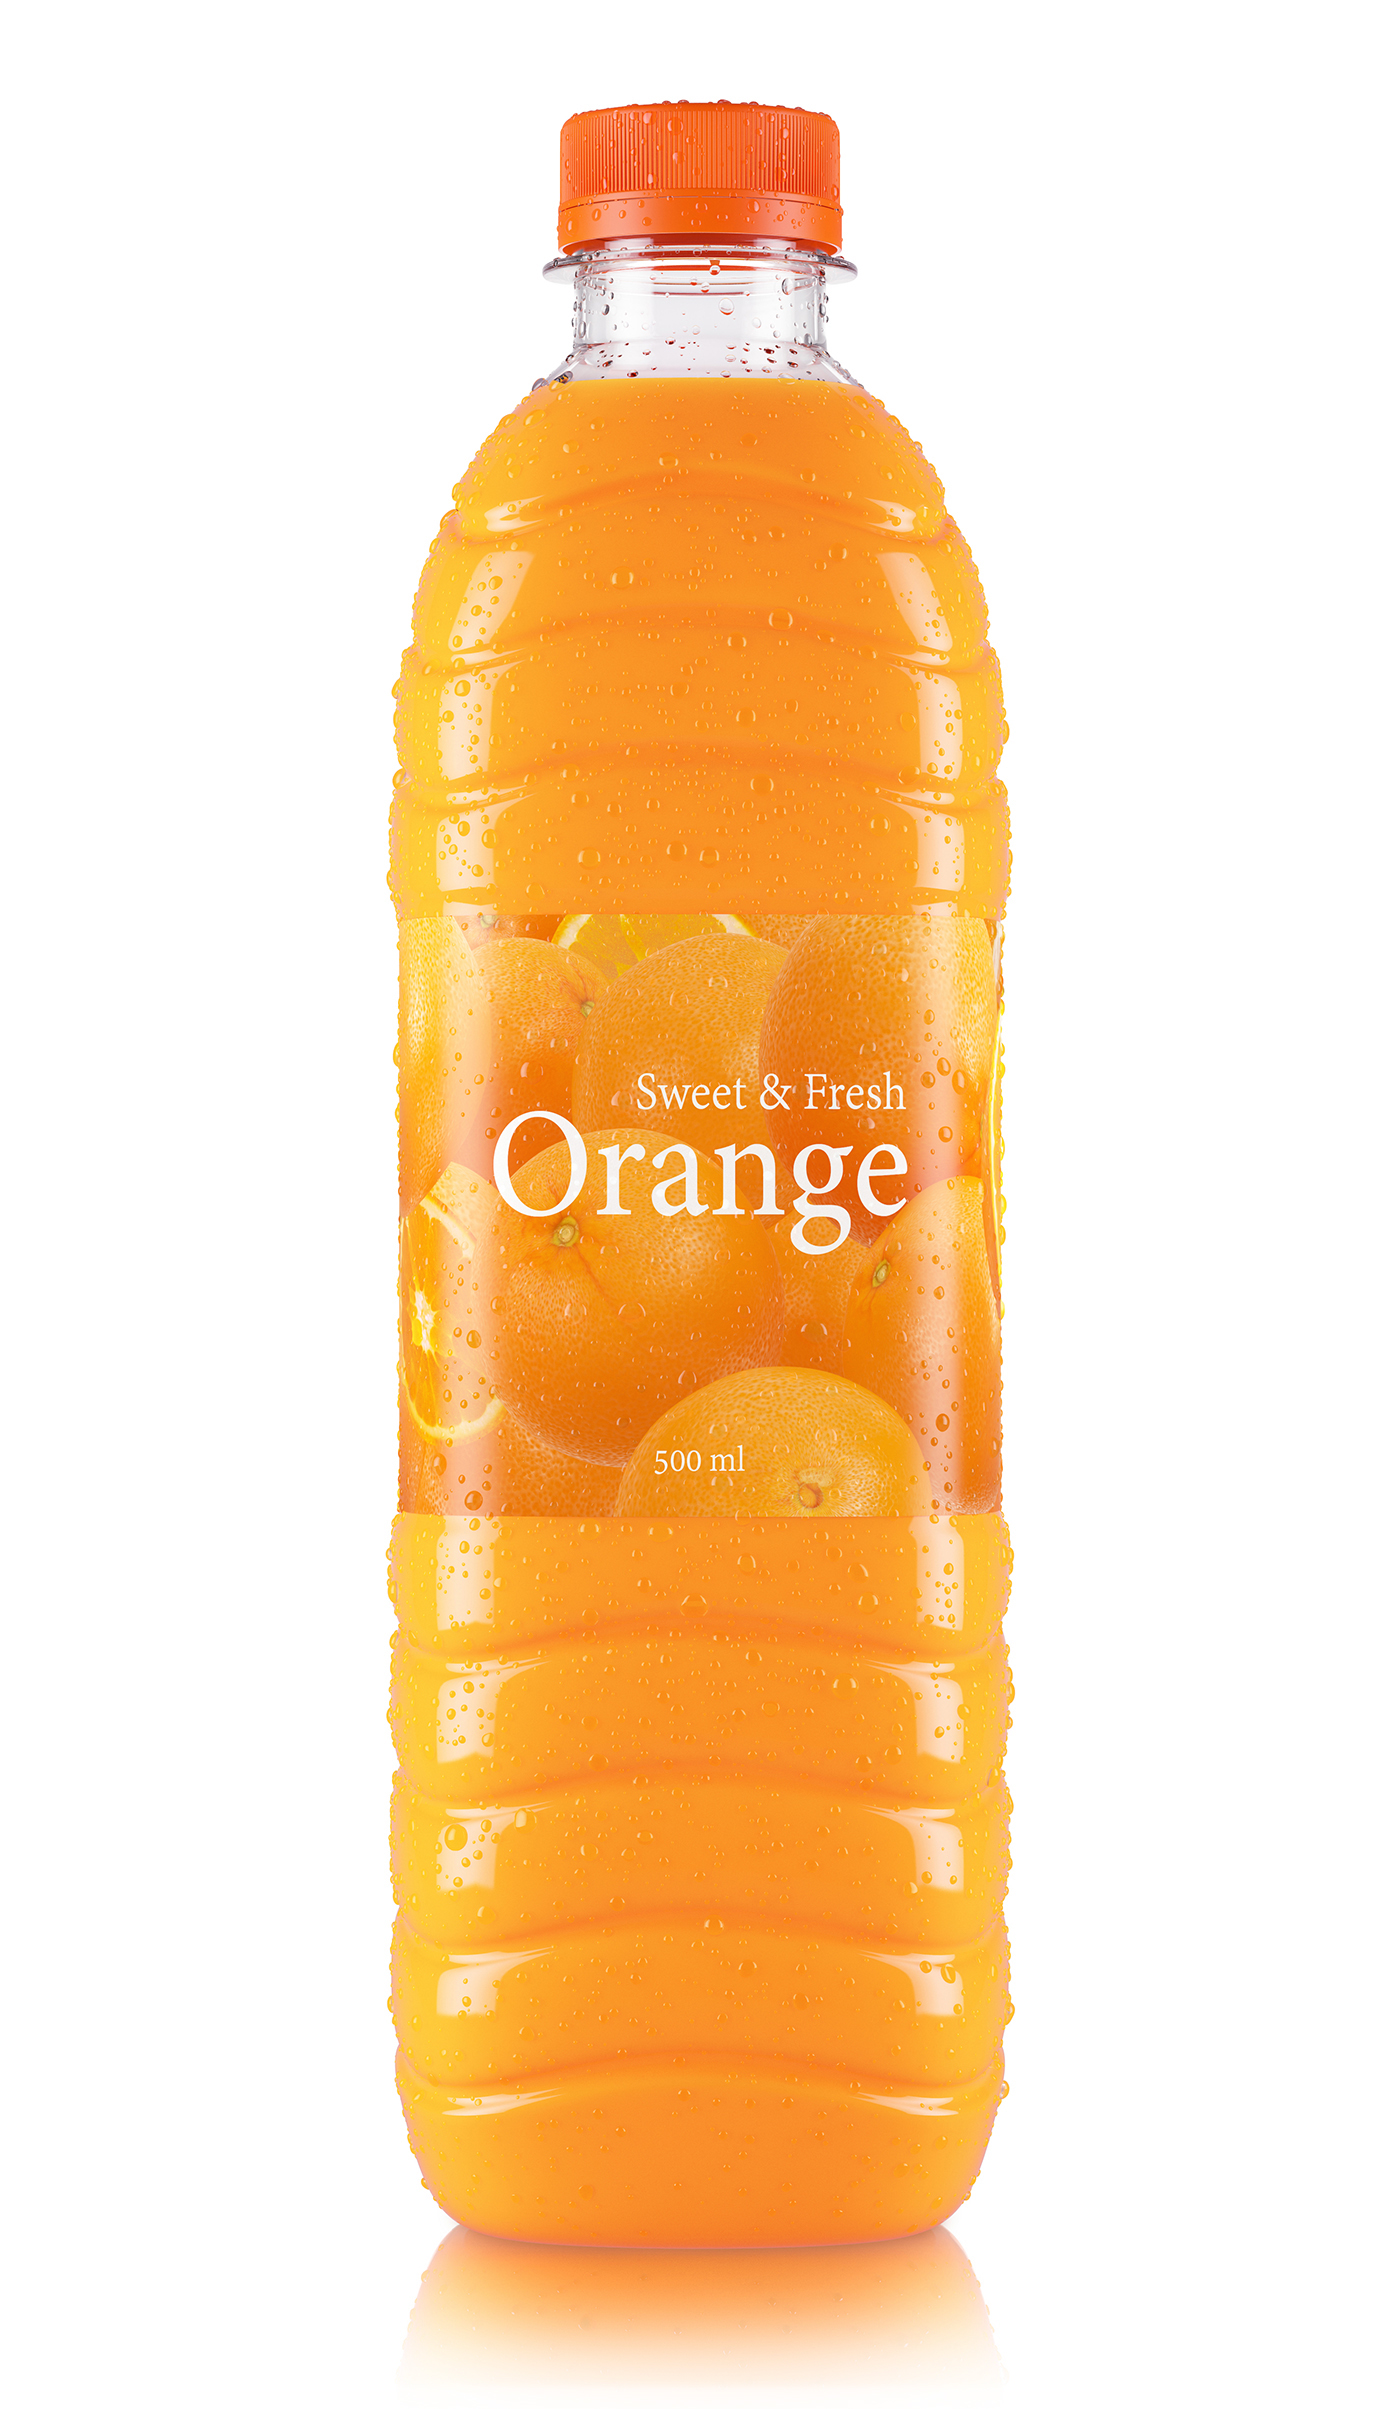 3D CGI bottle drops water beverage orange cherry visualization mineral water